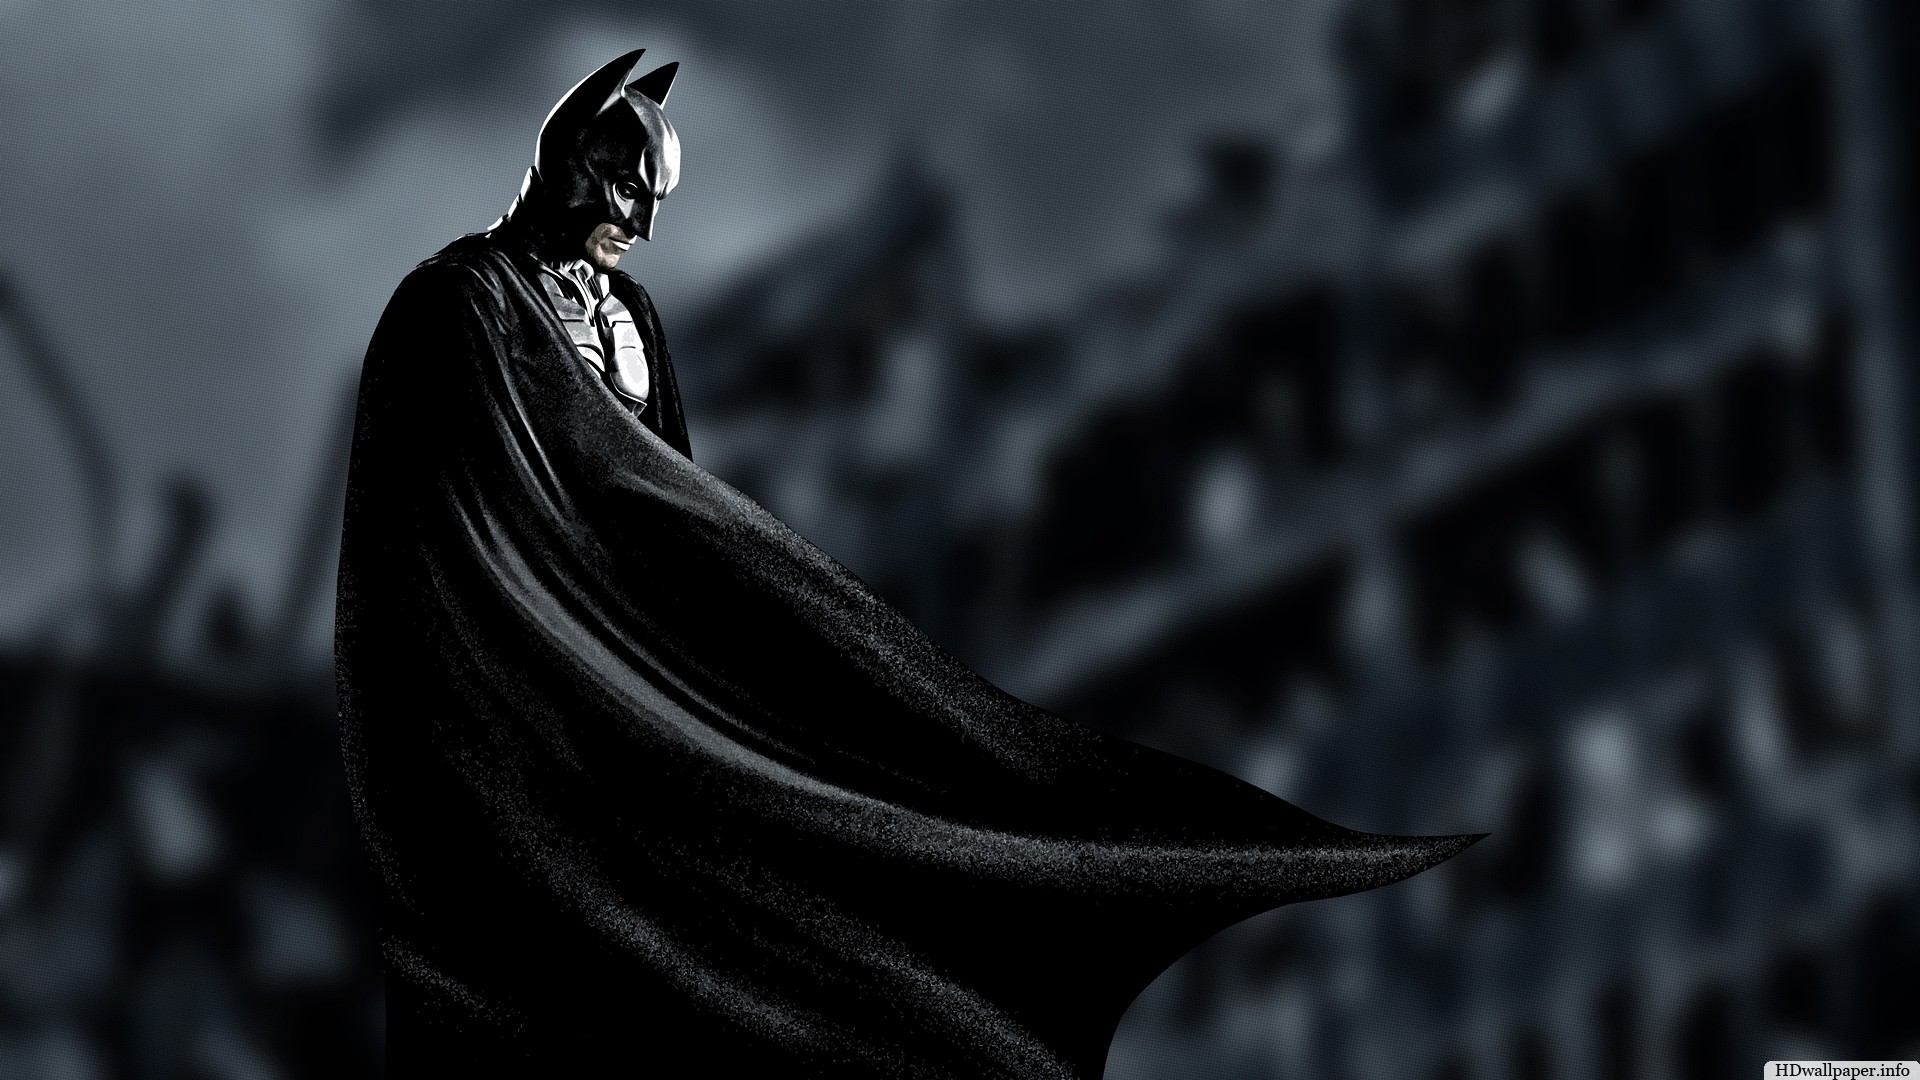 1920x1080 Batman Dark Knight Rises Hd Wallpaper - http://hdwallpaper.info/batman